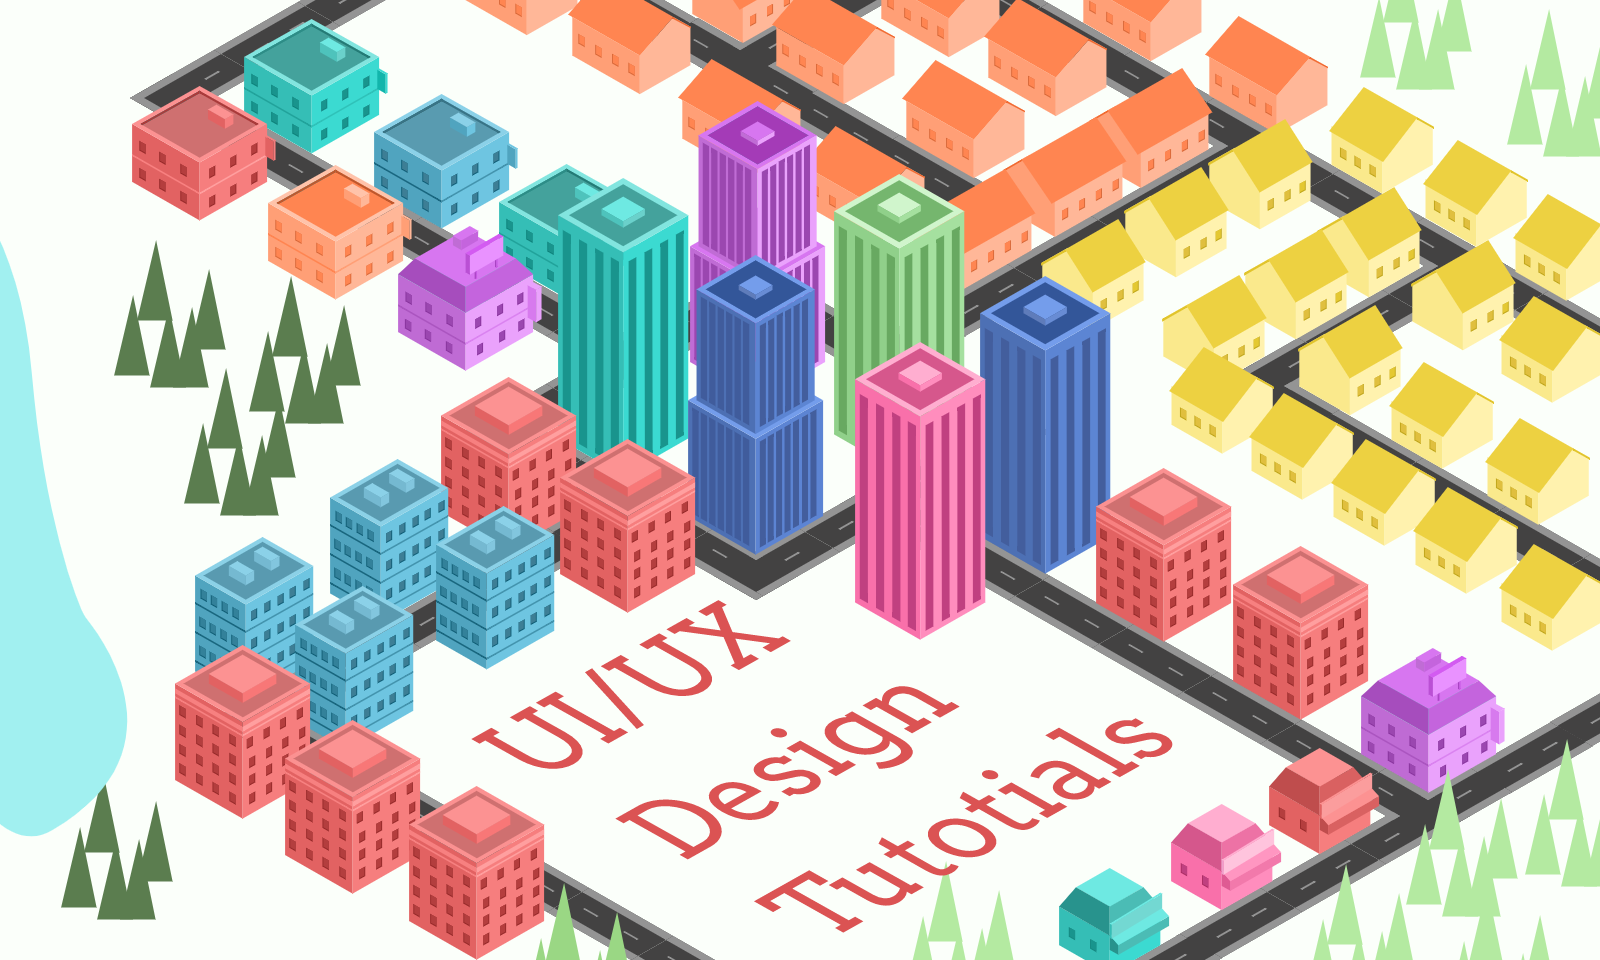  UI/UX Design Tutorials – How to Get Started